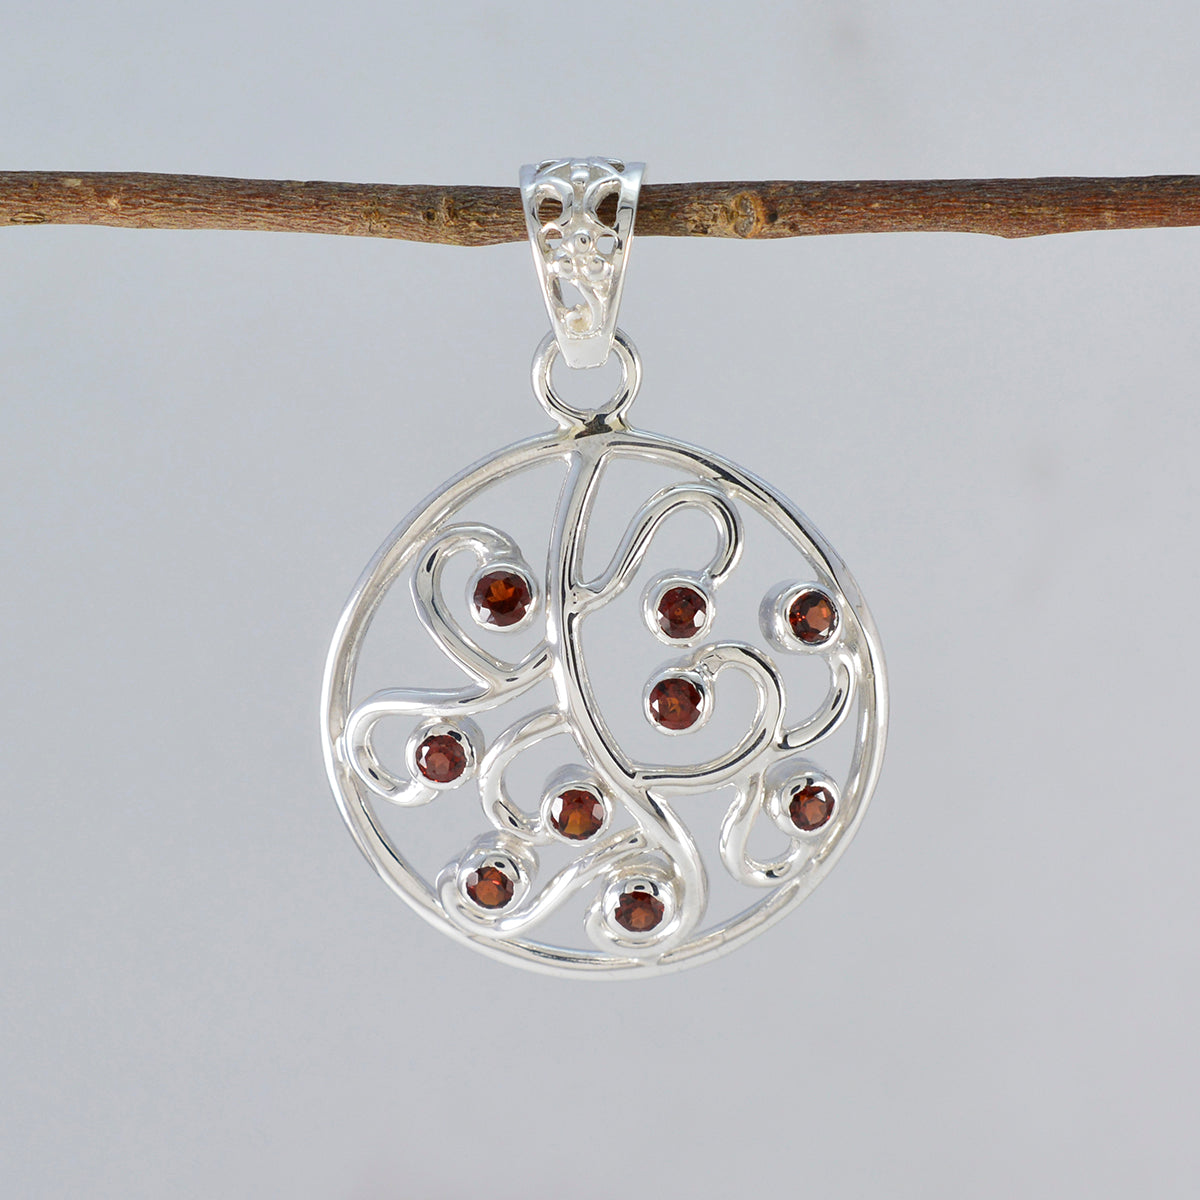 Riyo Lovely Gemstone Round Faceted Red Garnet 1045 Sterling Silver Pendant Gift For Birthday